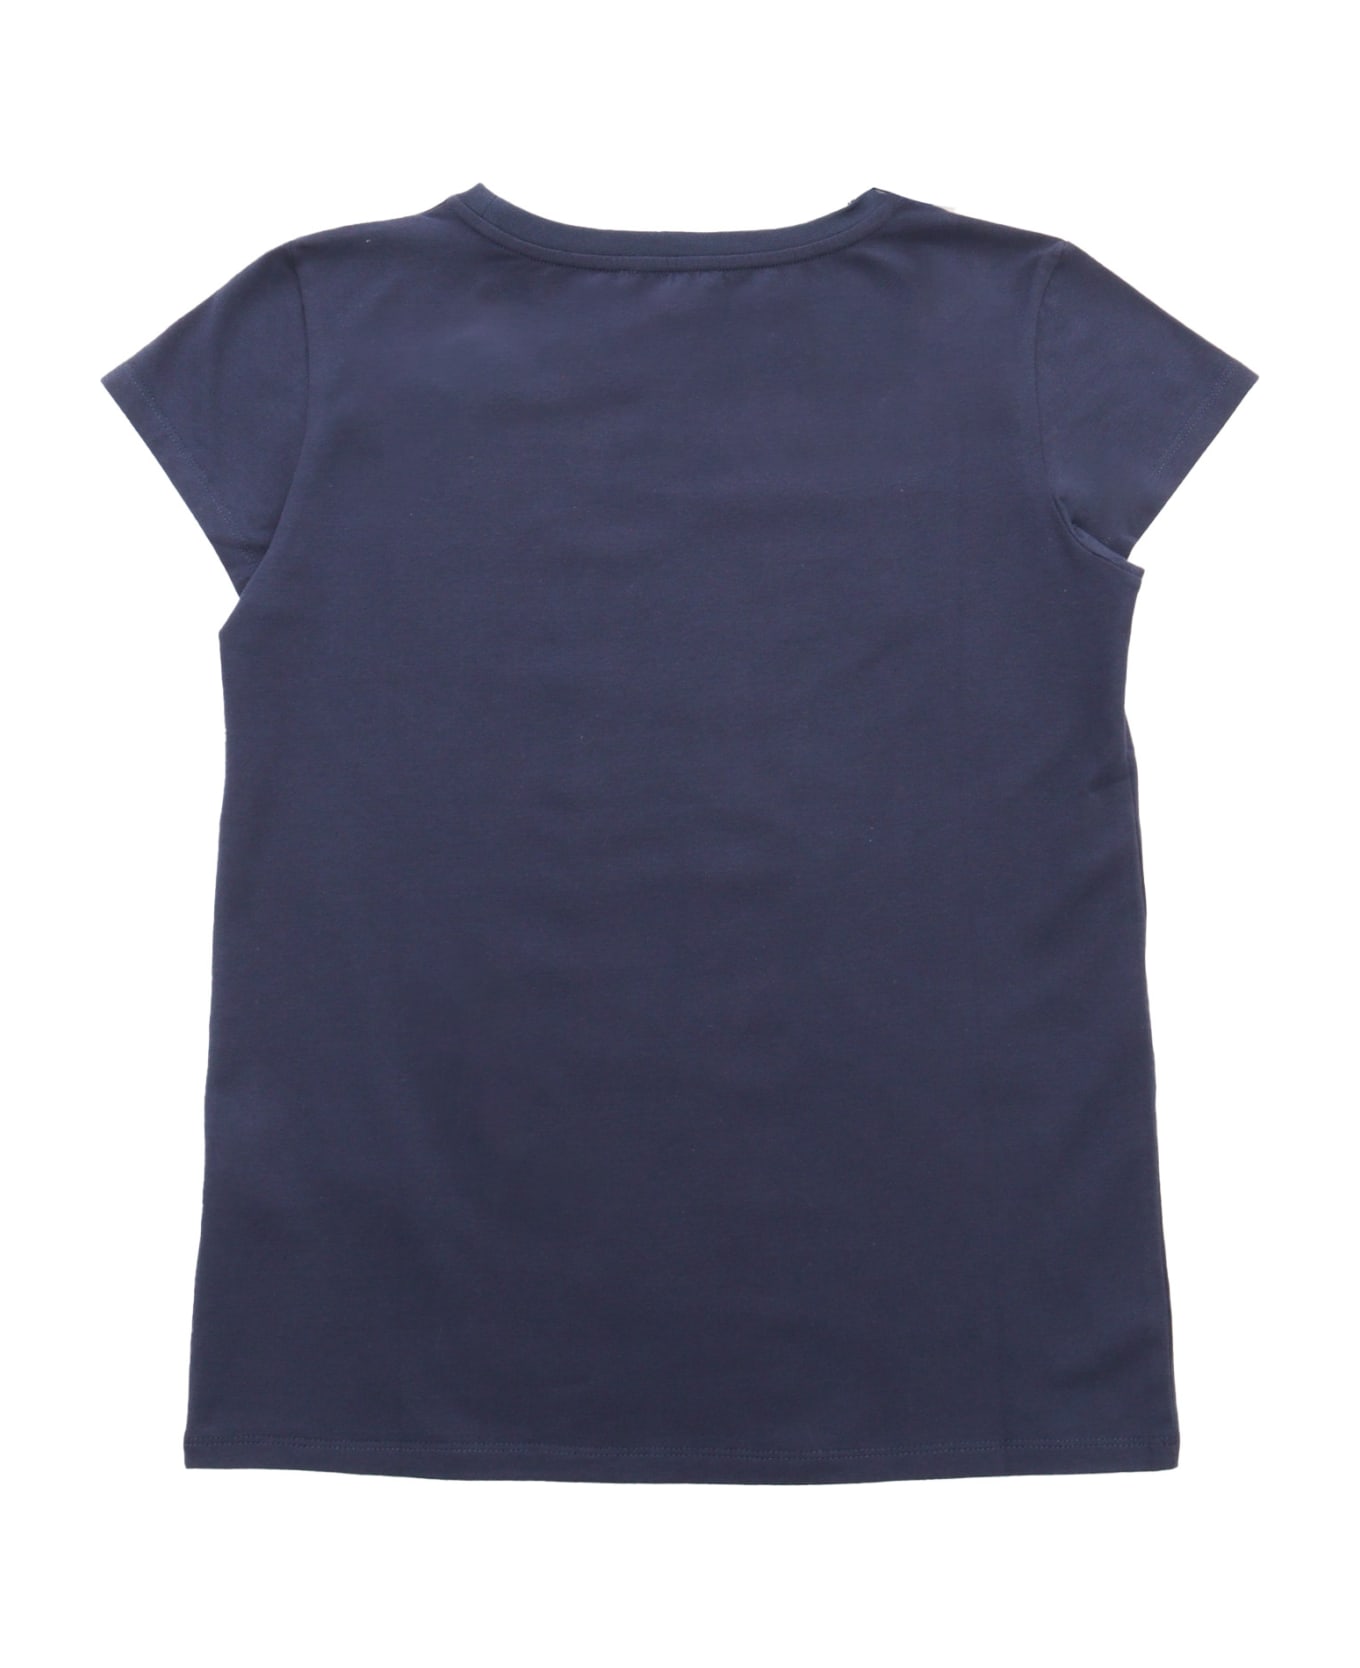 Balmain Blue T-shirt With Logo - BLUE